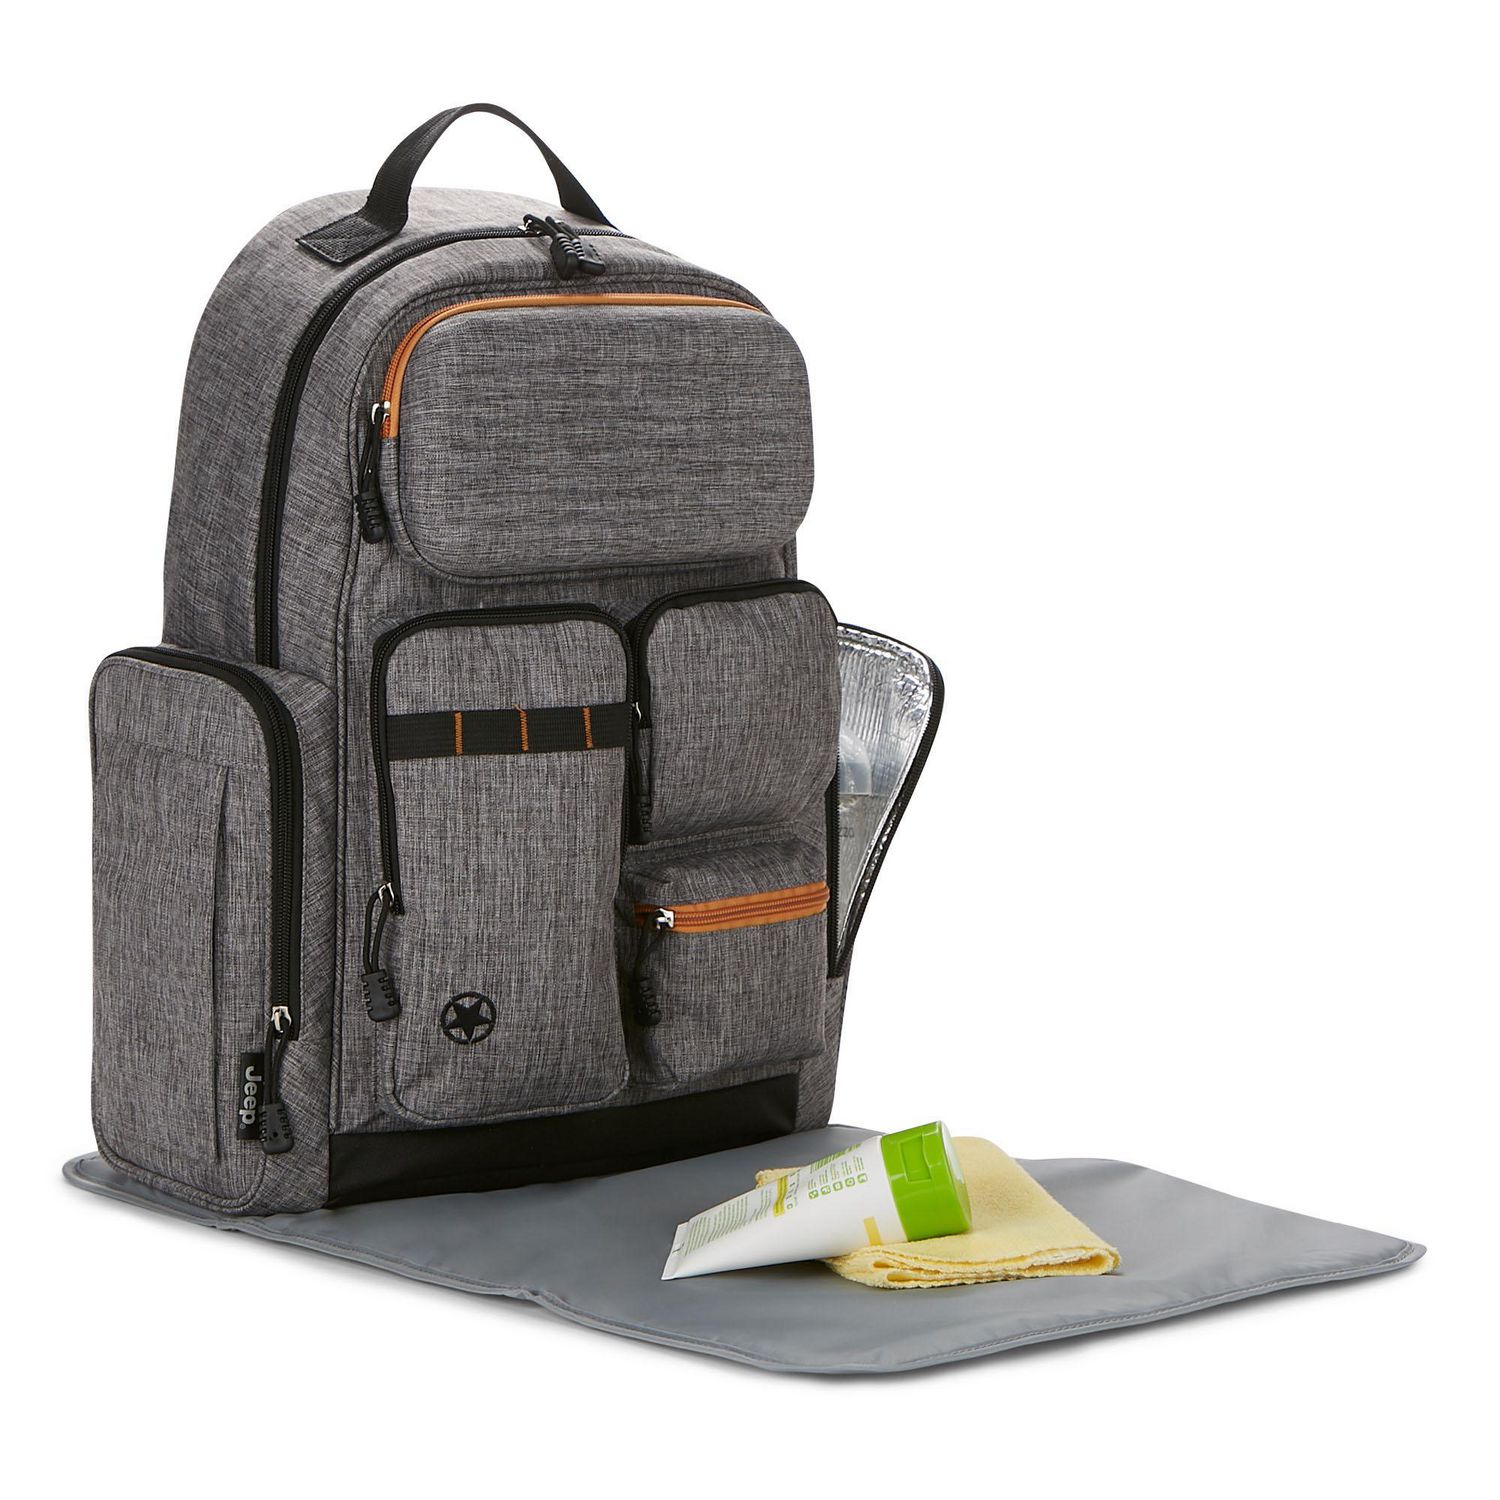 Jeep Adventurers Backpack Diaper Bag Grey//orange